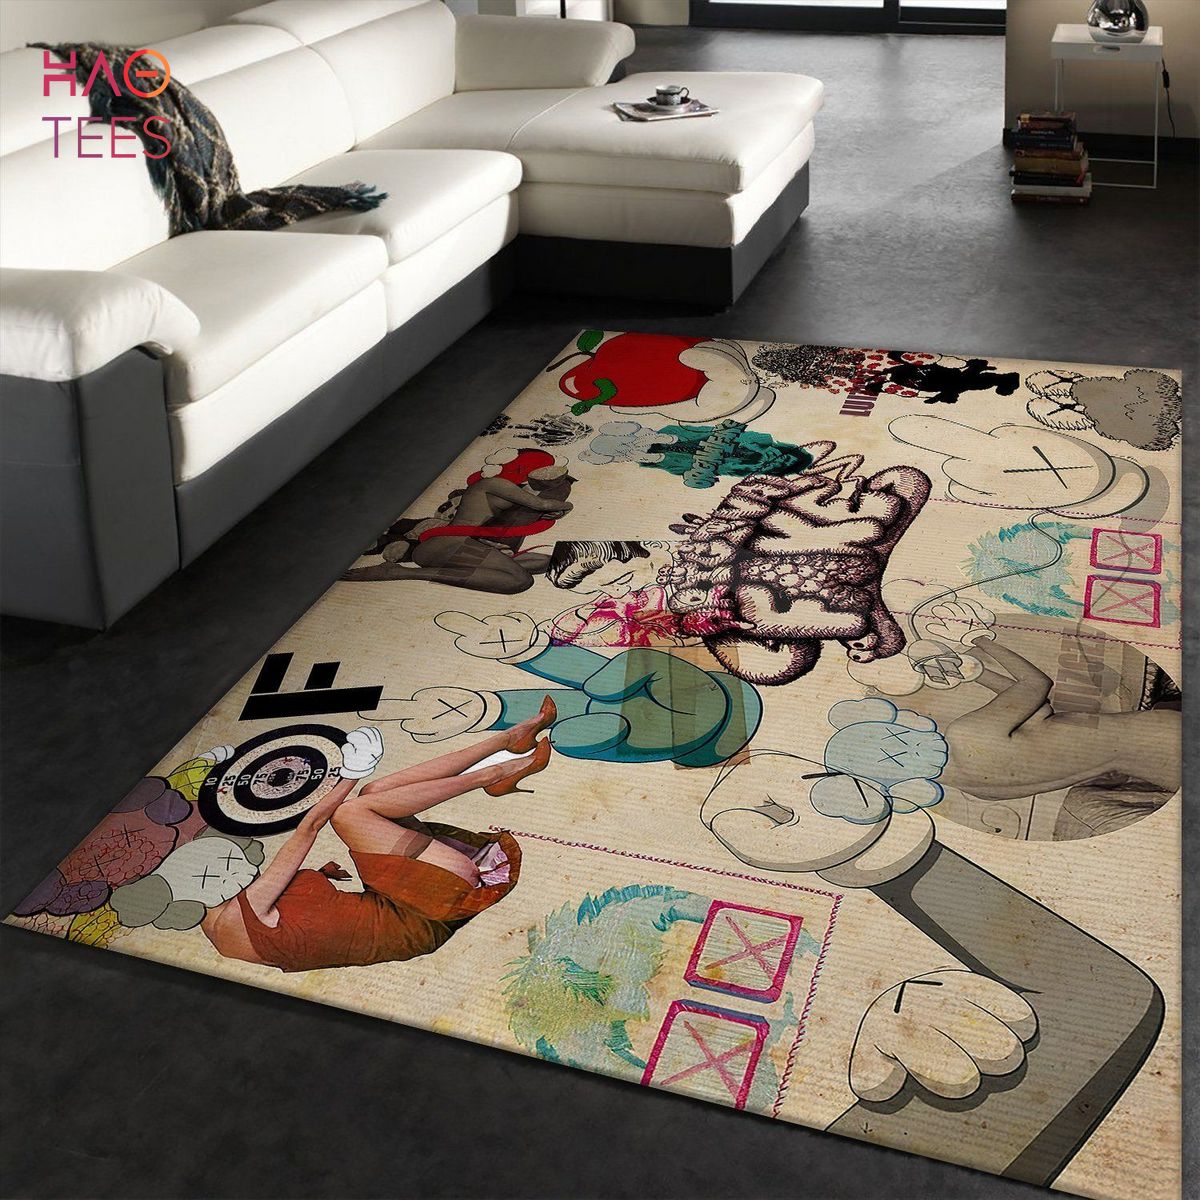 Kaws Supreme Luxury Collection Area Rugs Living Room Carpet Floor Decor